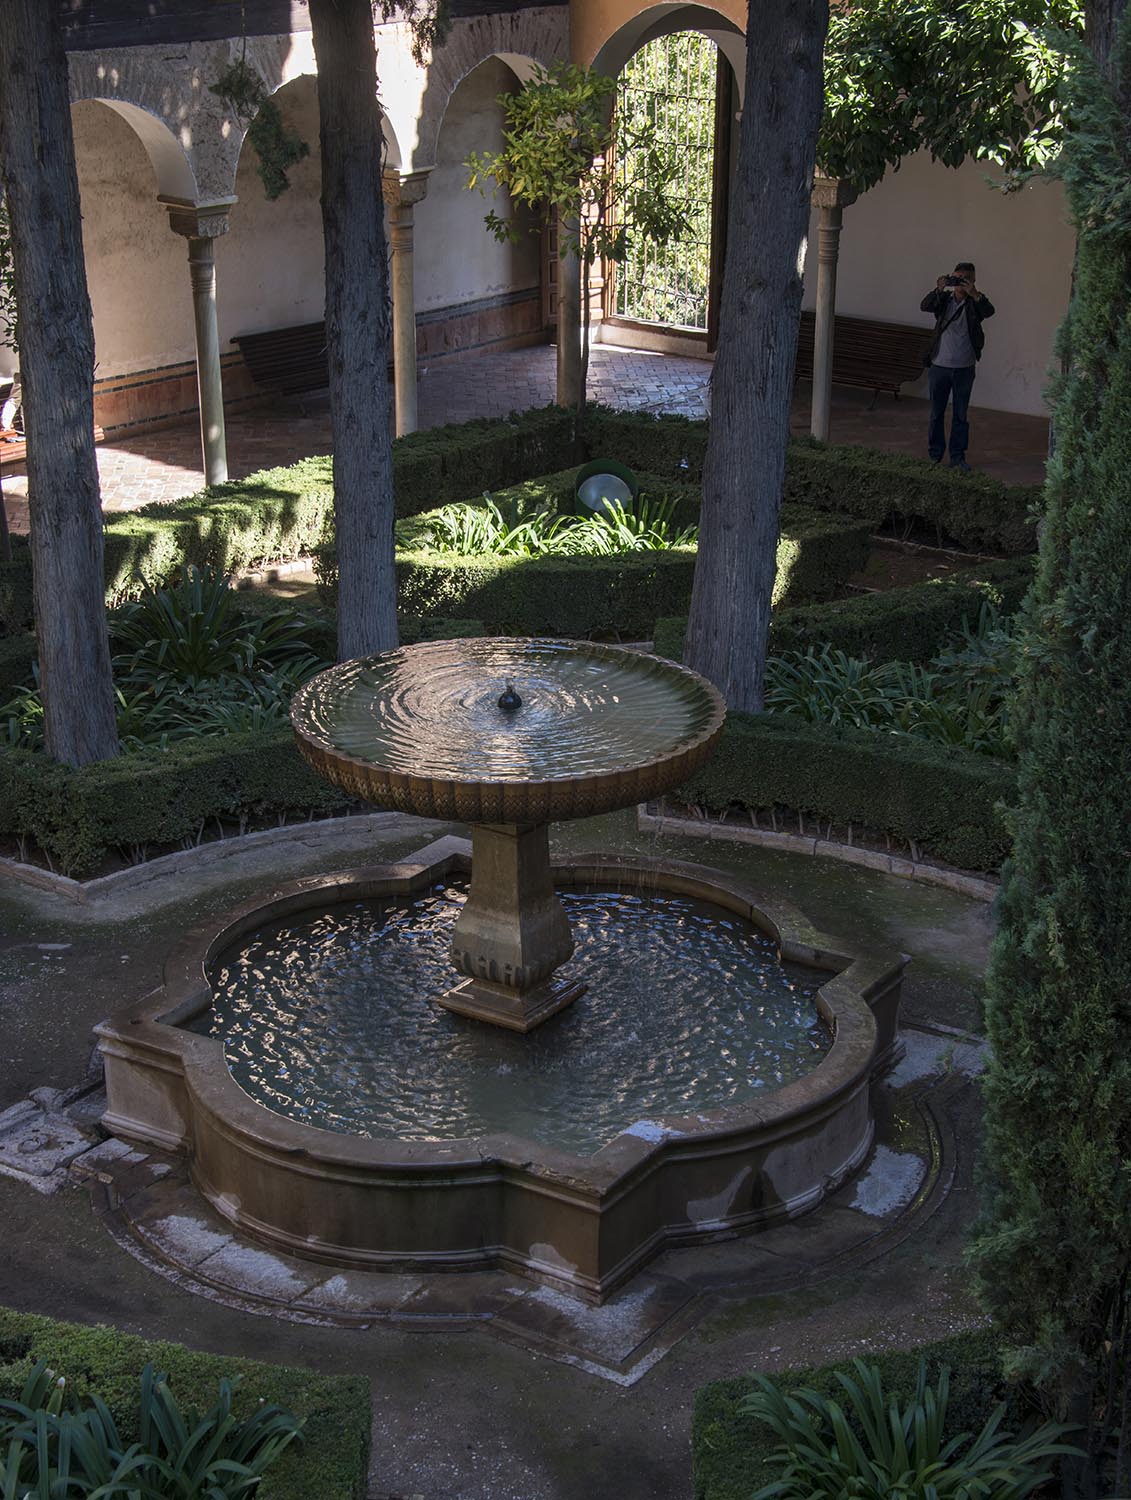 View of Daraxa's garden and fountain